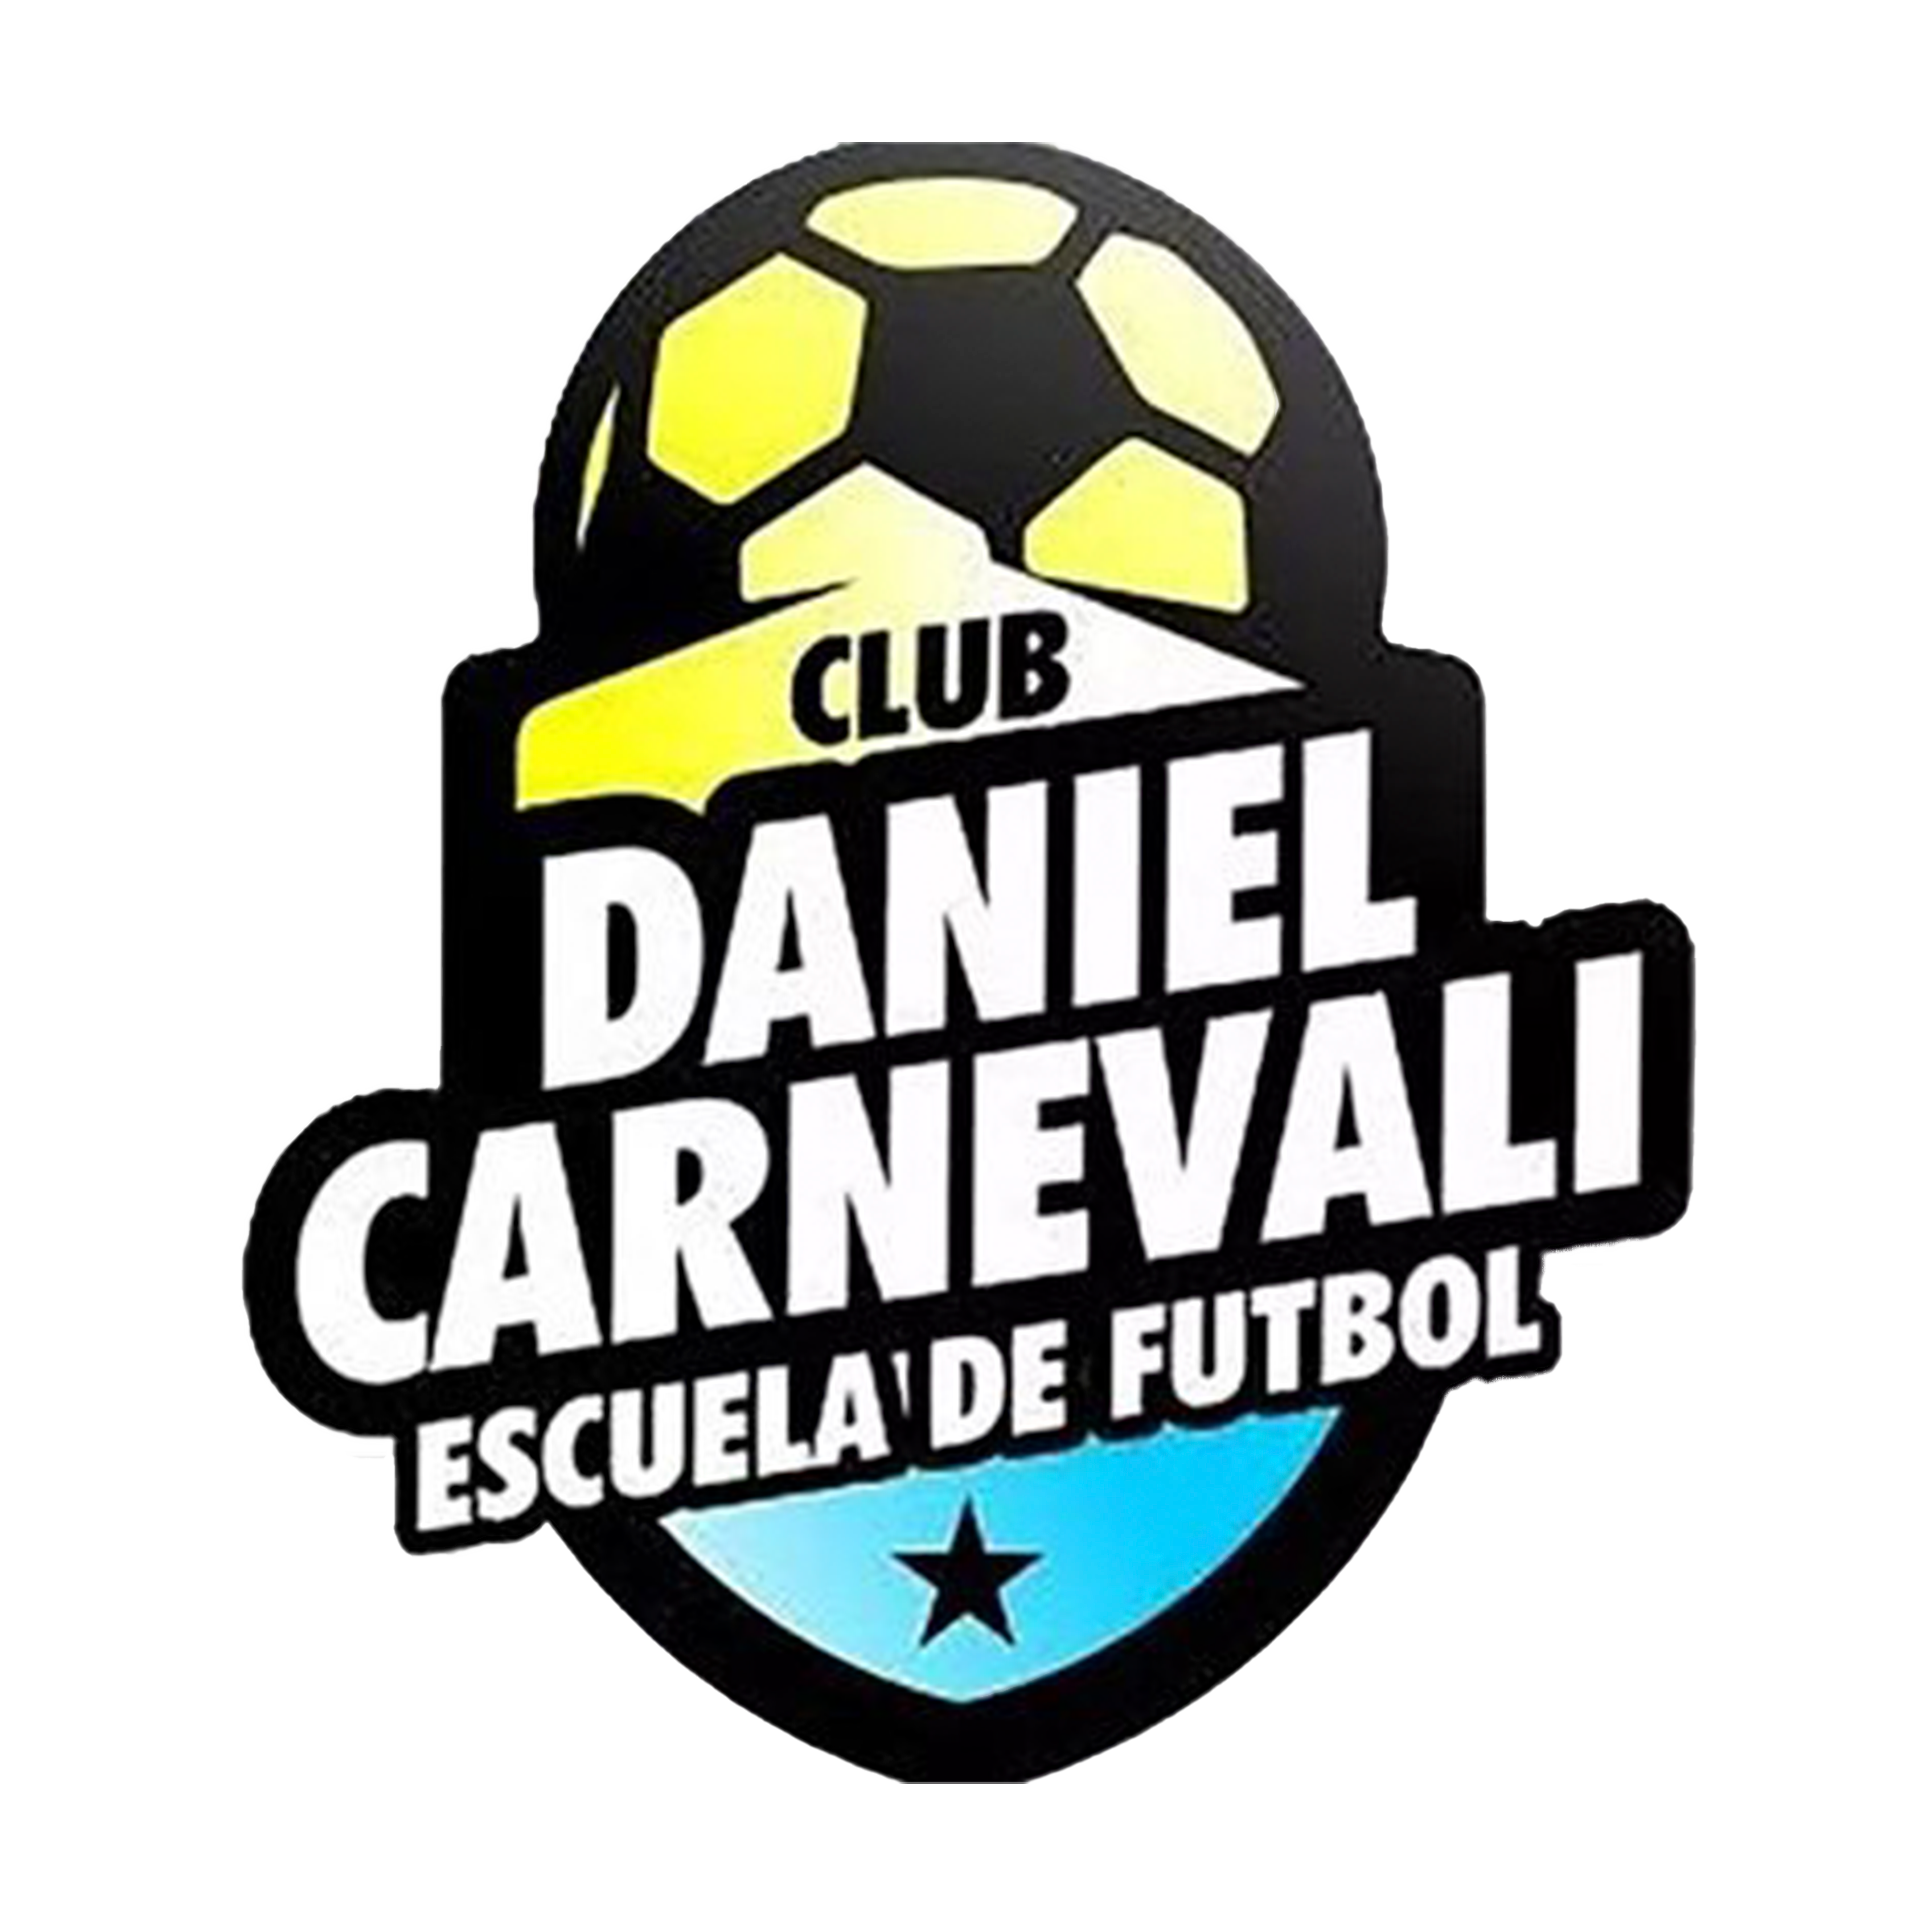 Club Daniel Carnevali